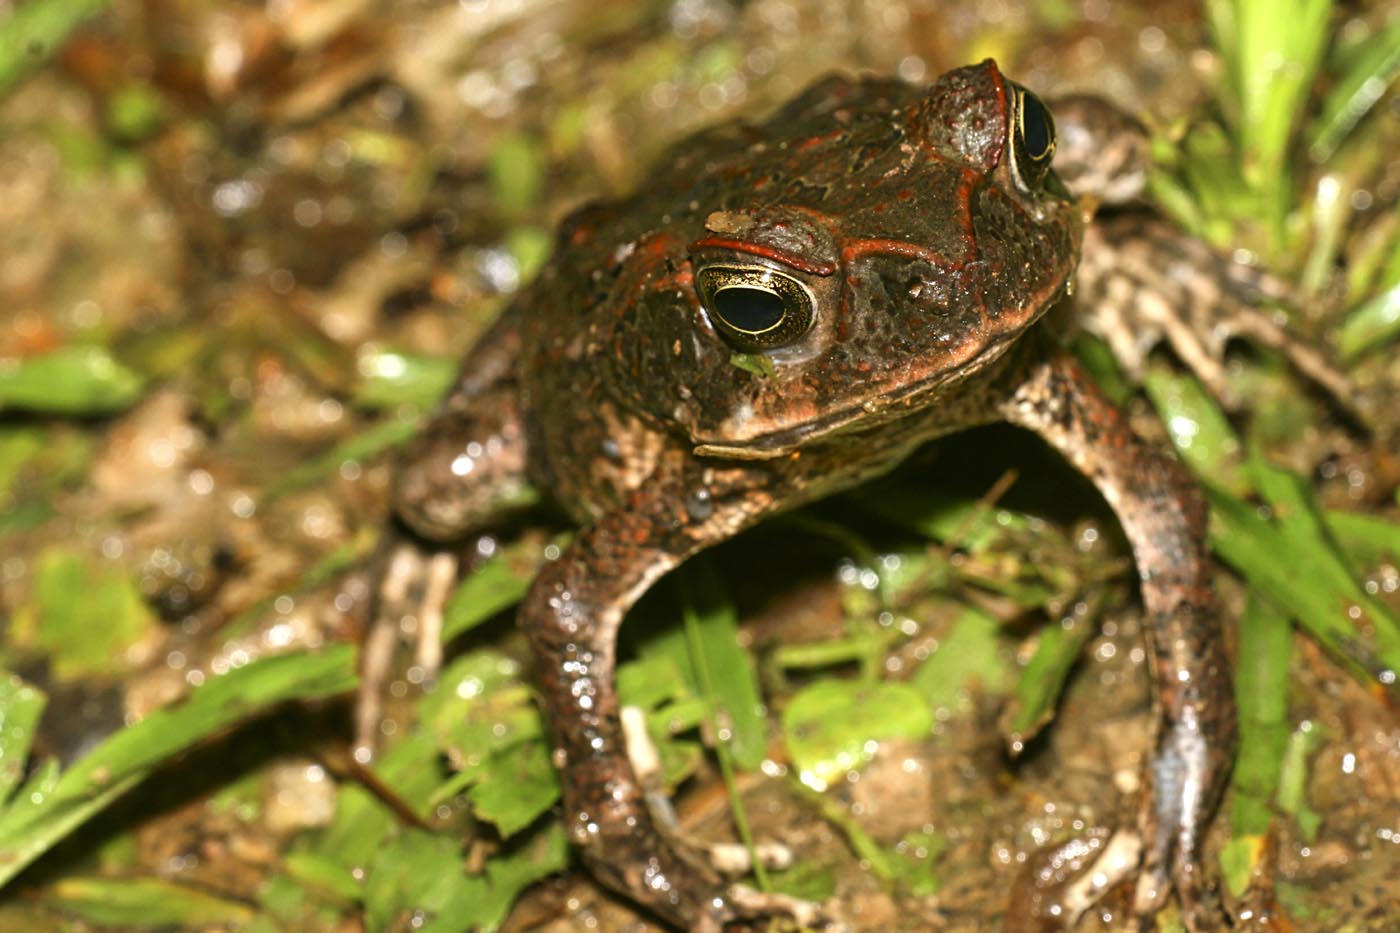 Tropical Toad, Napo River Basin, Amazonia, Ecuador